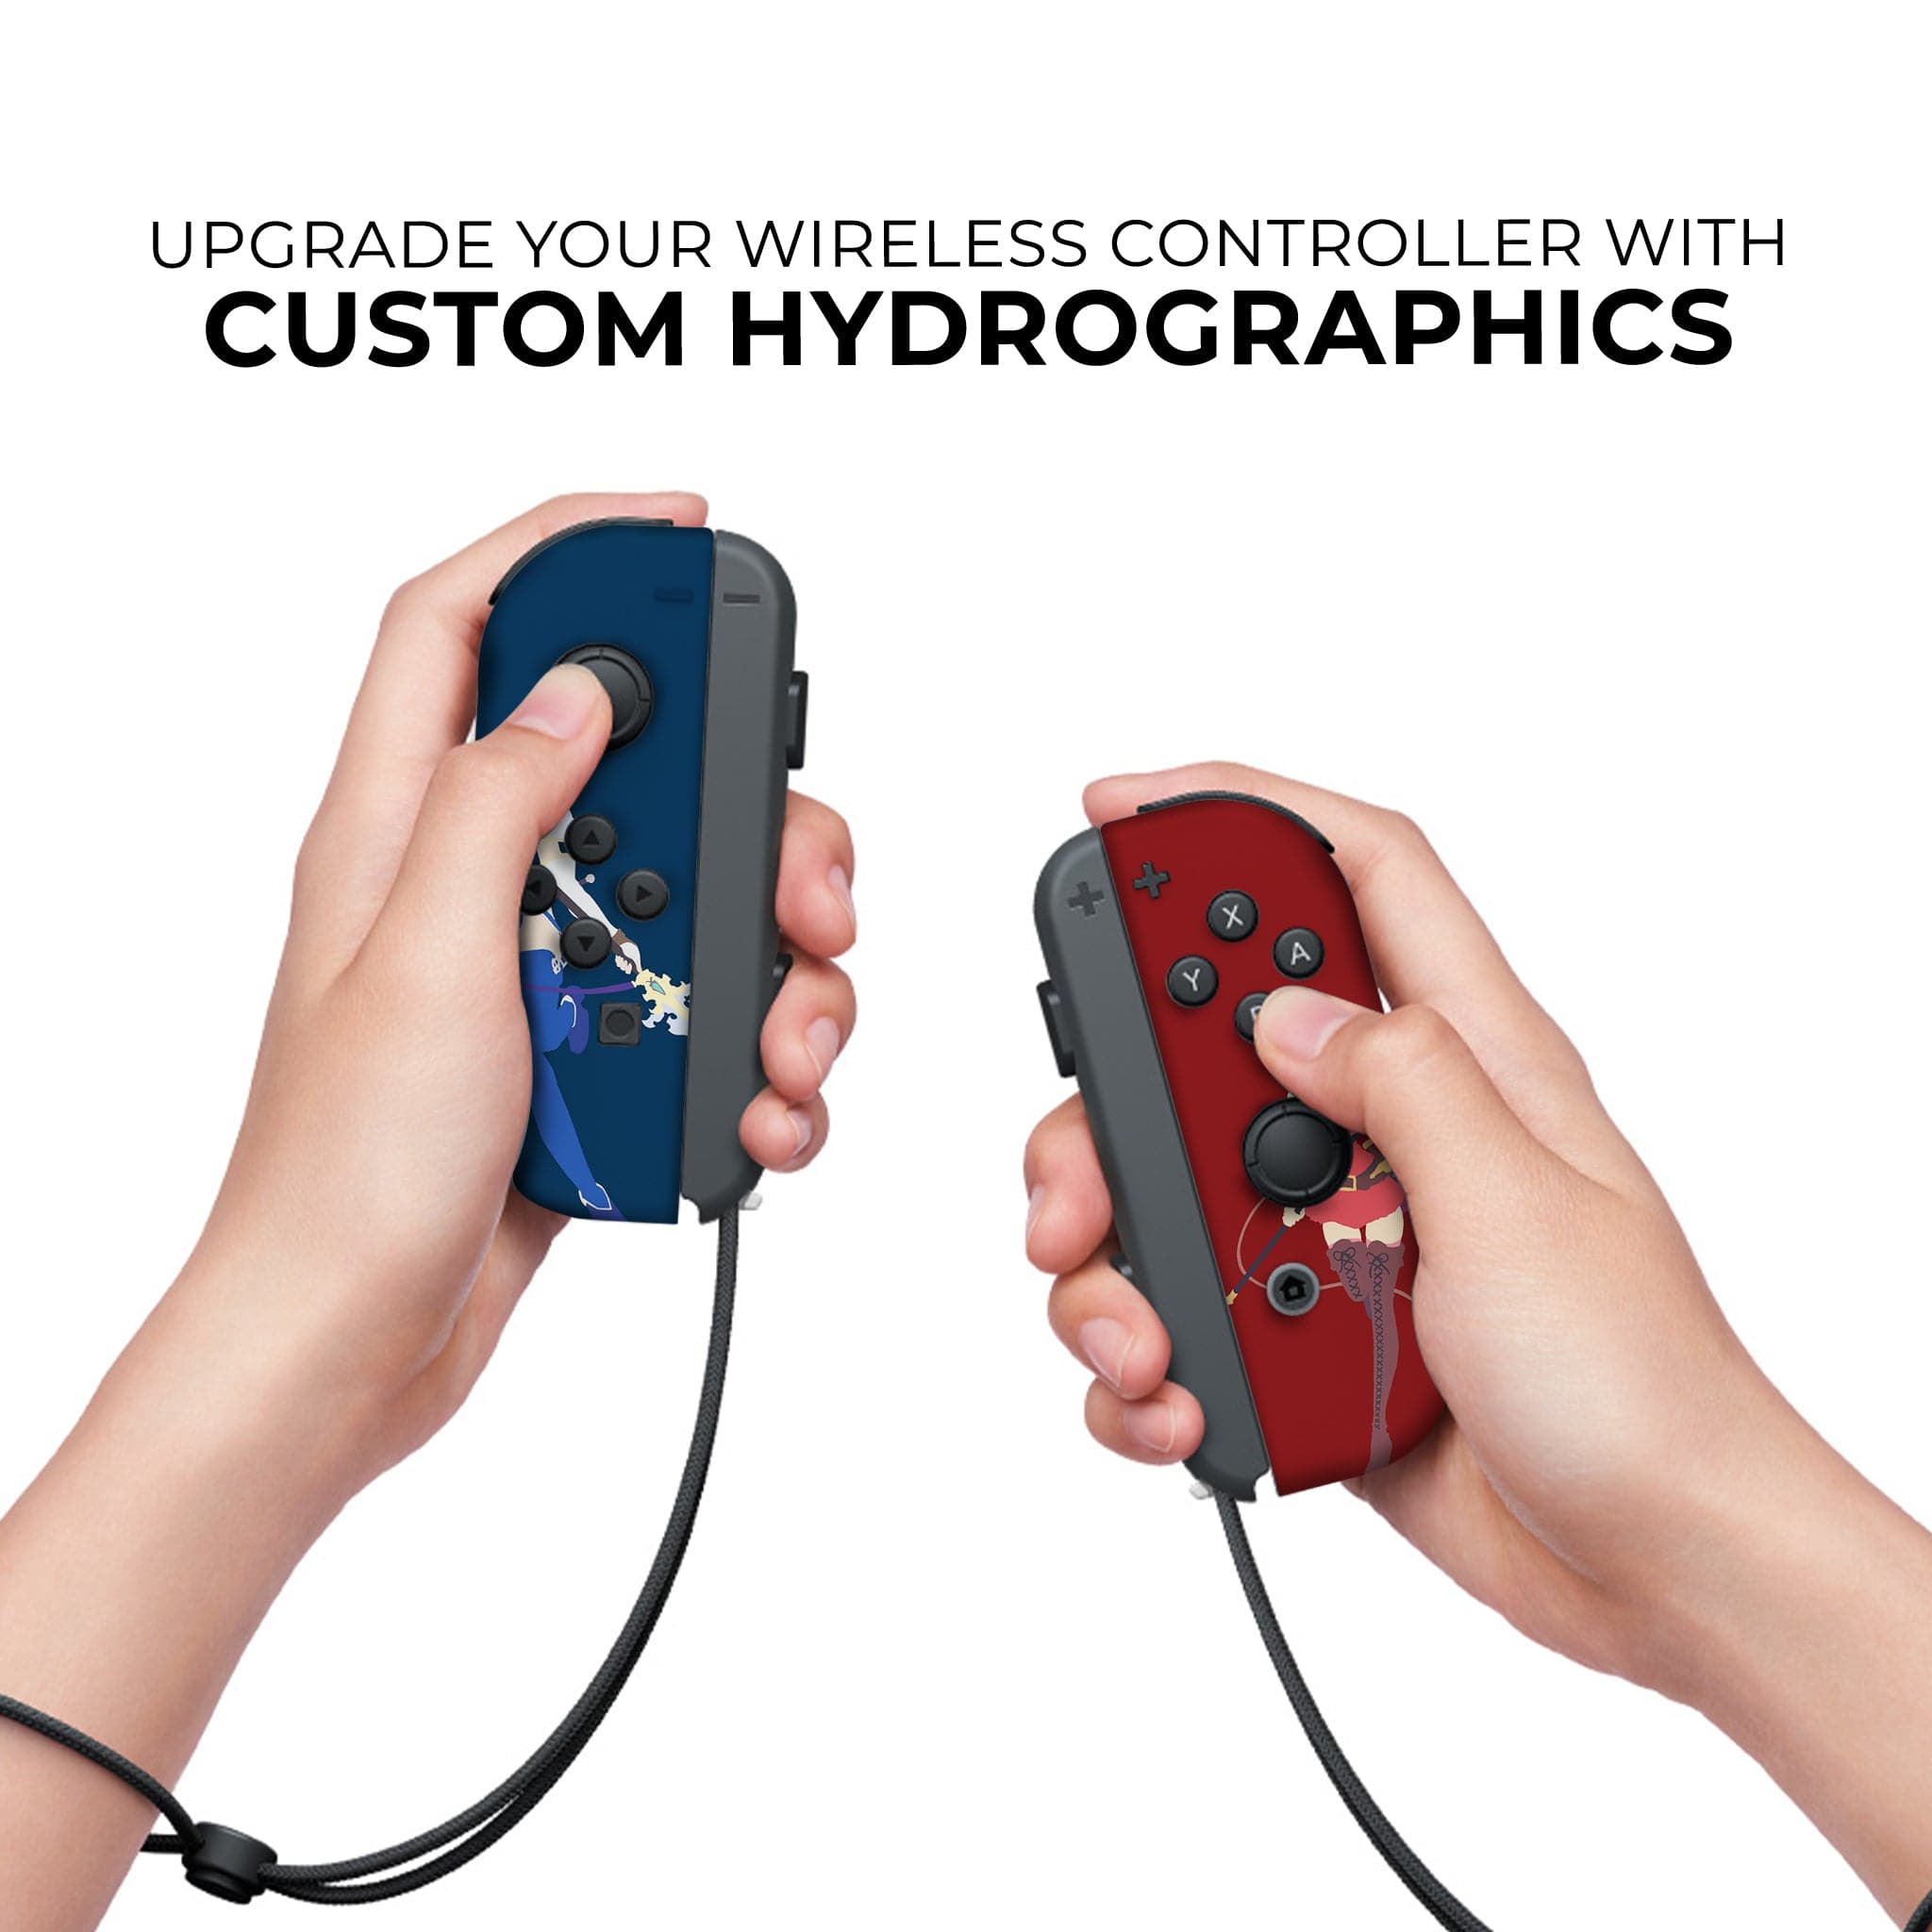 Nintendo Switch Joy-Con [L/R] Controllers - Fire Emblem